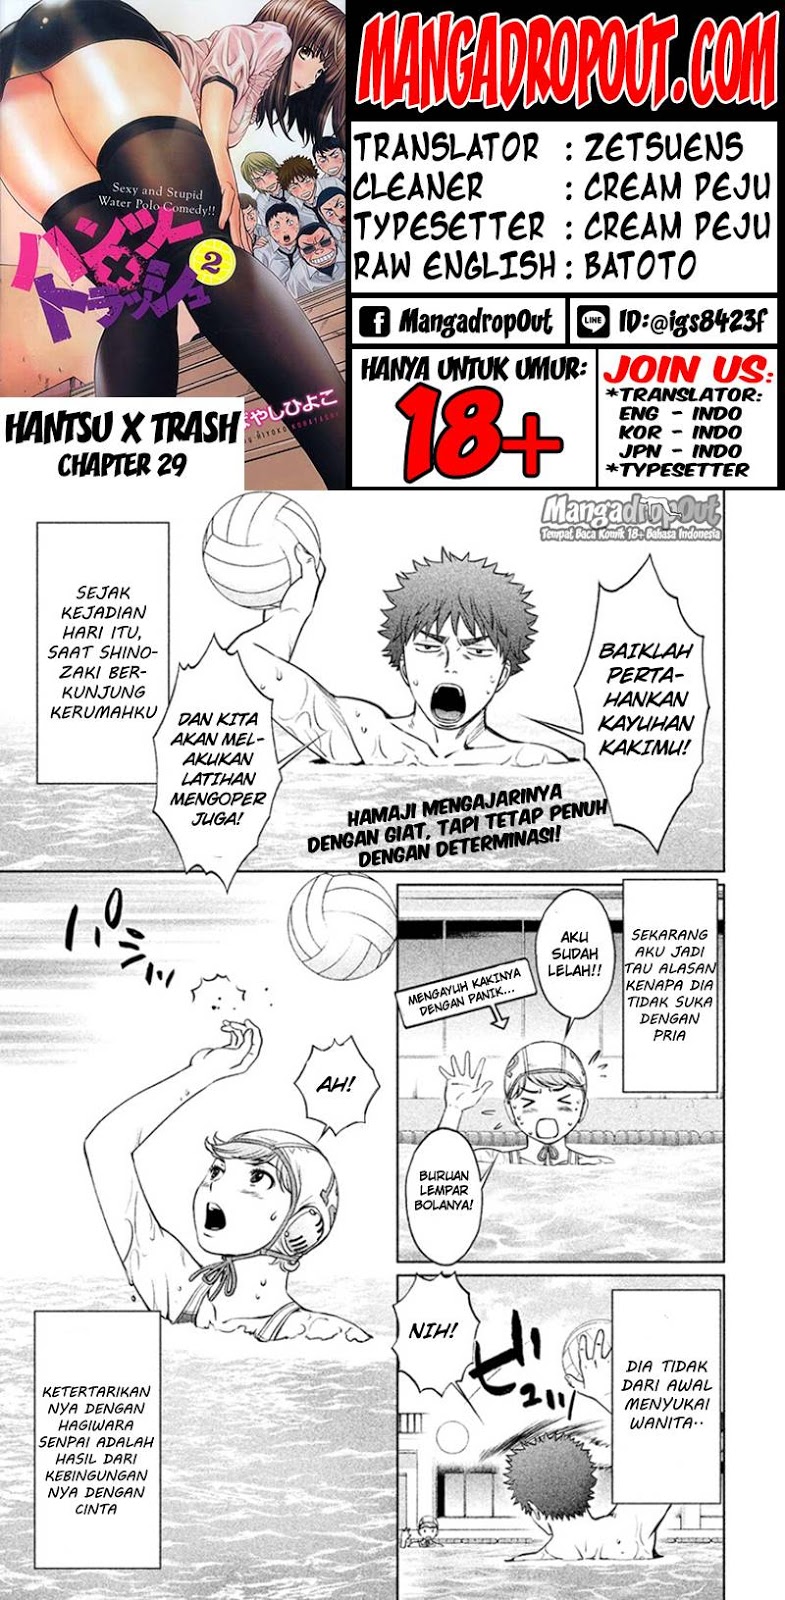 Hantsu X Trash: Chapter 29 - Page 1